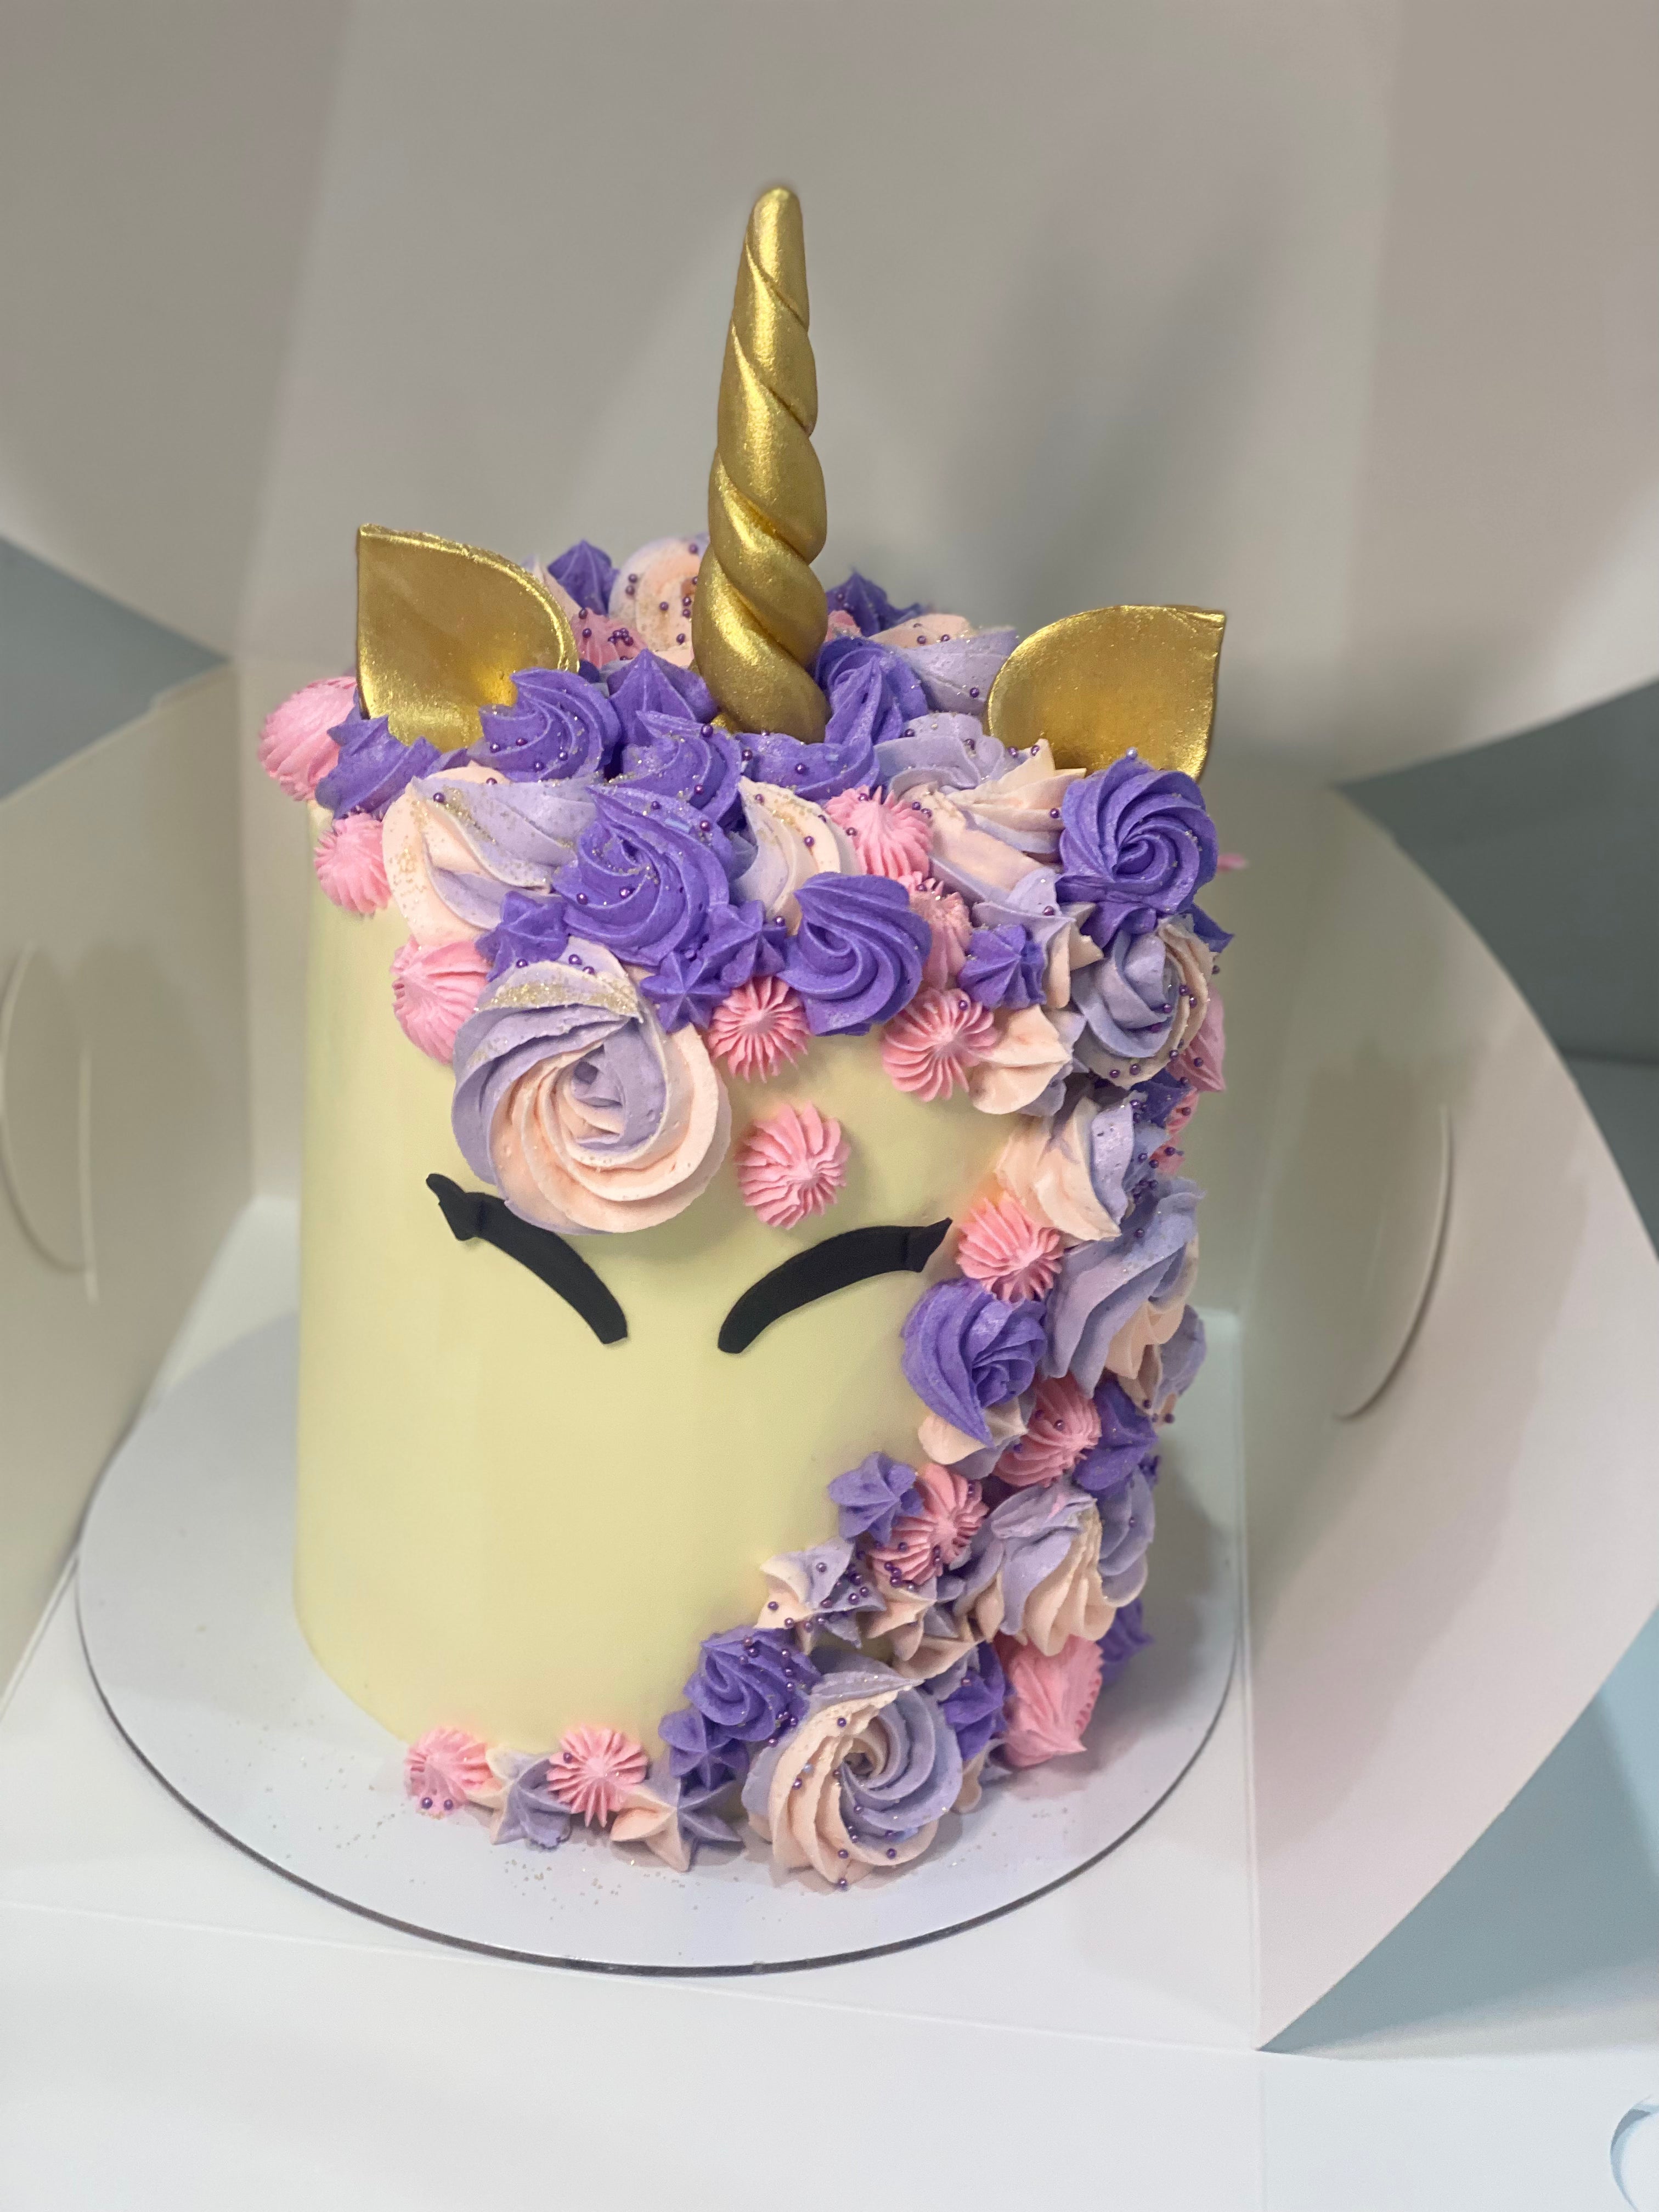 Sassy unicorn - tall cake